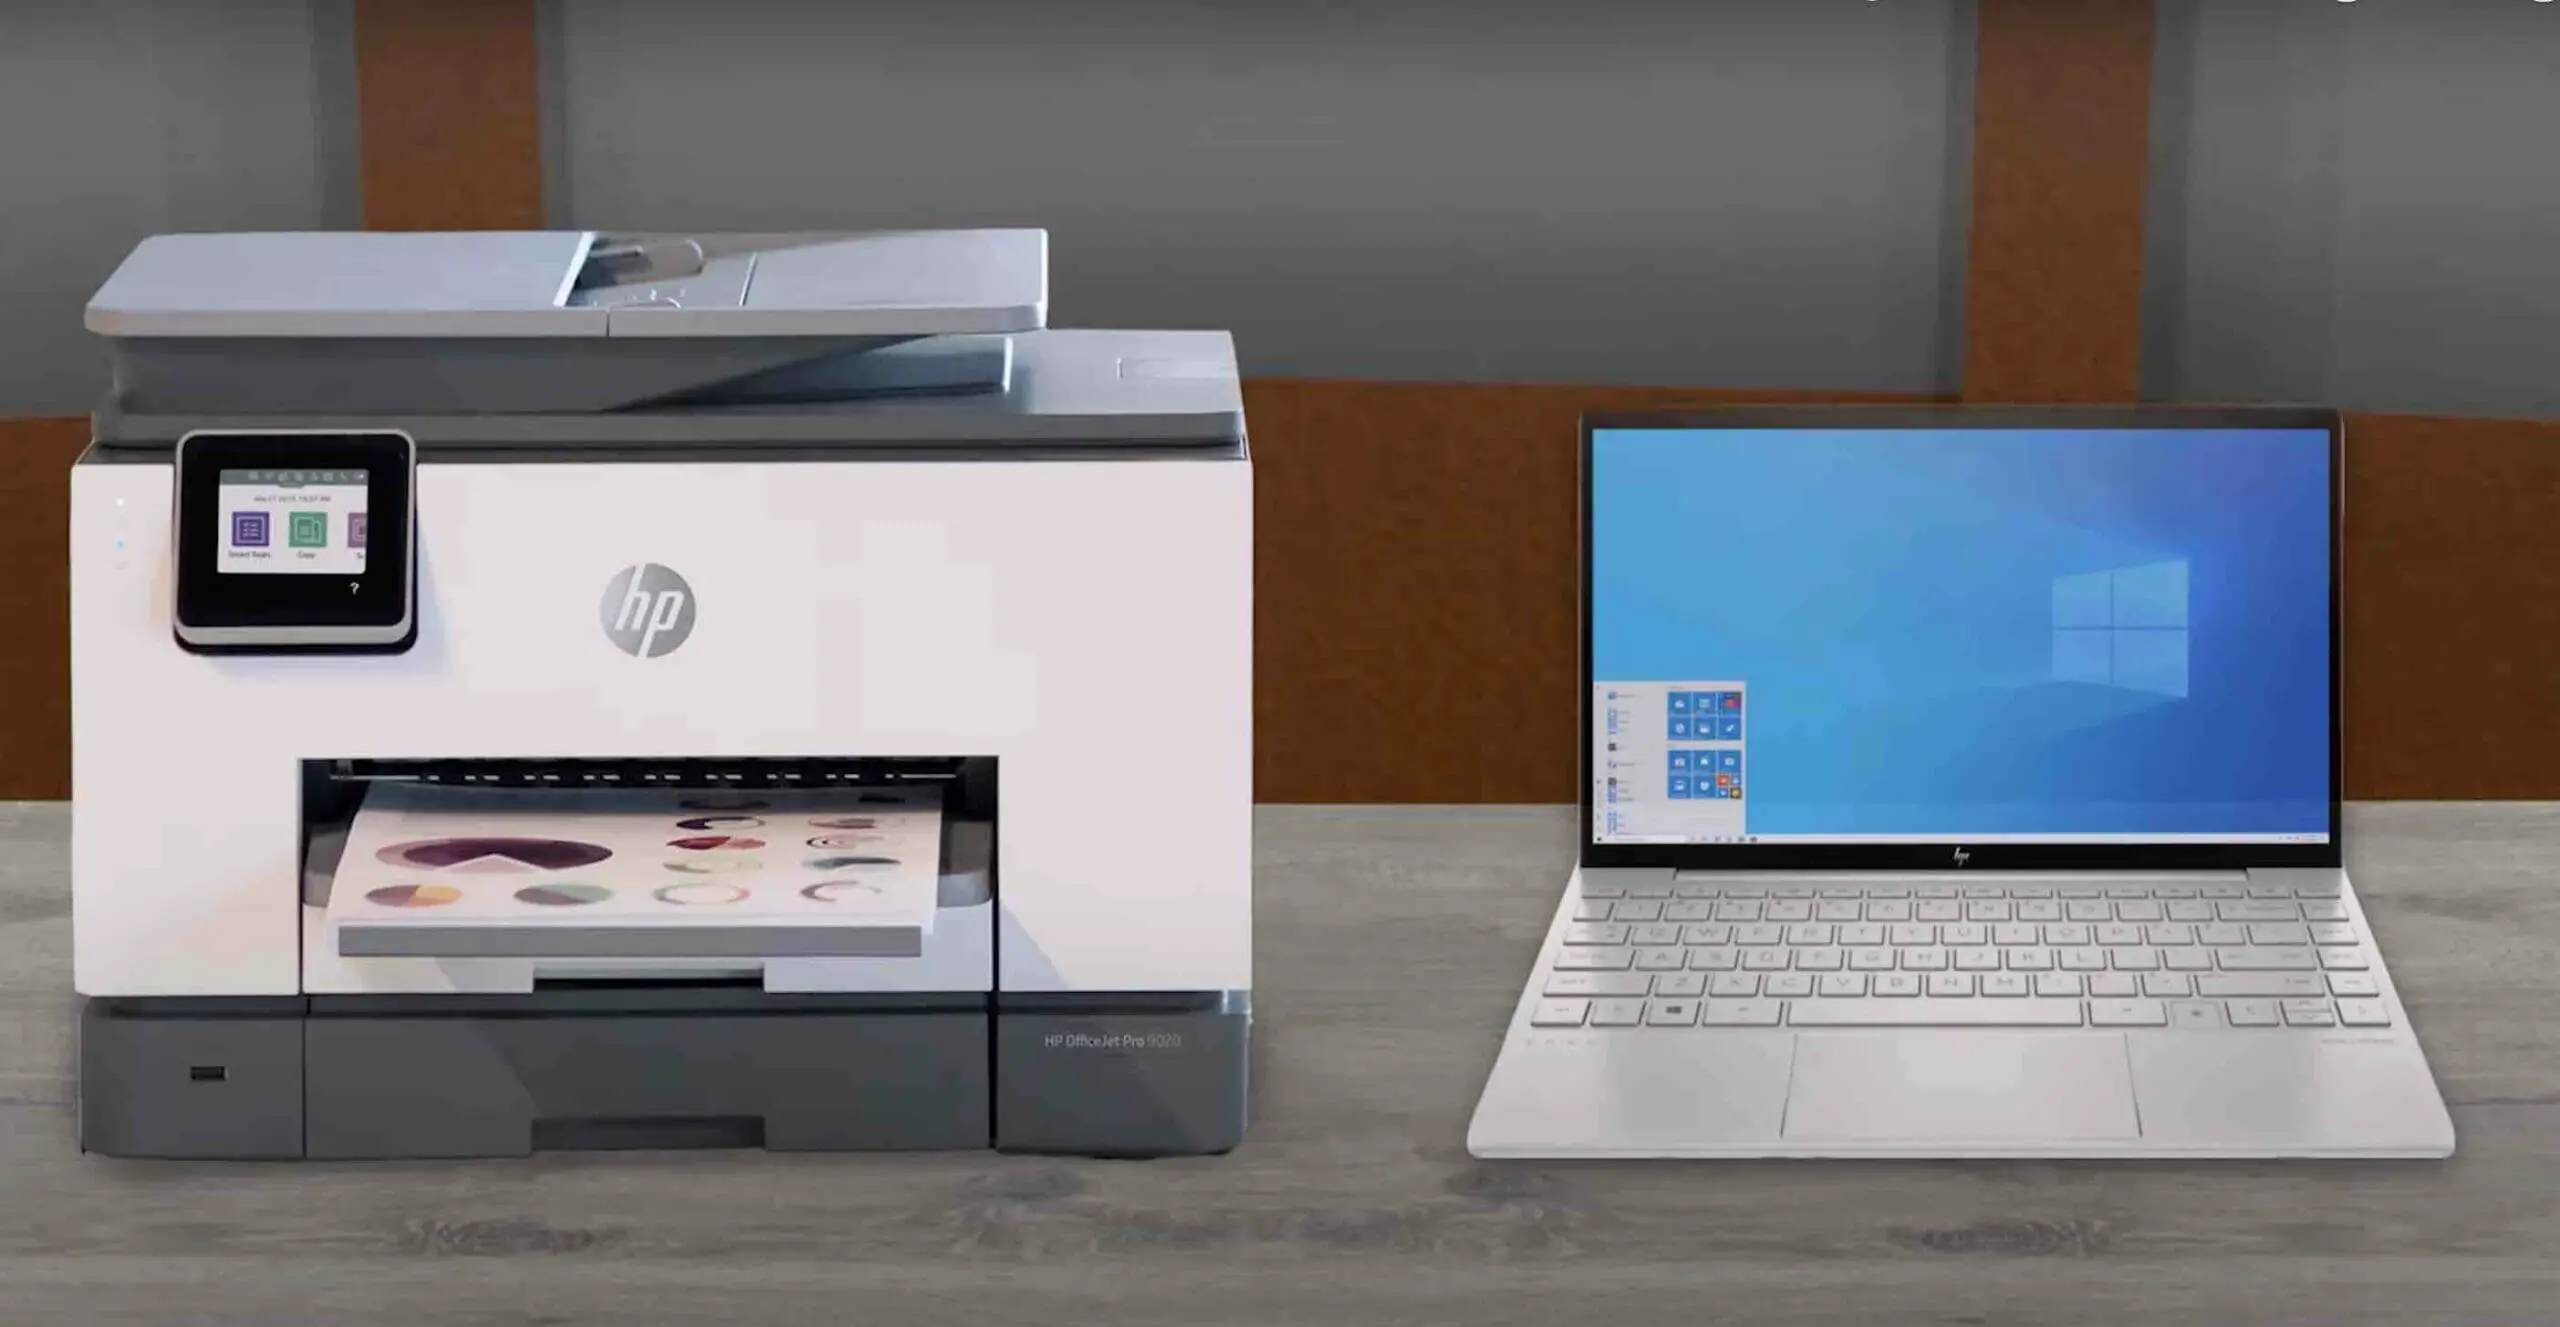 HP Printer and a Windows laptop